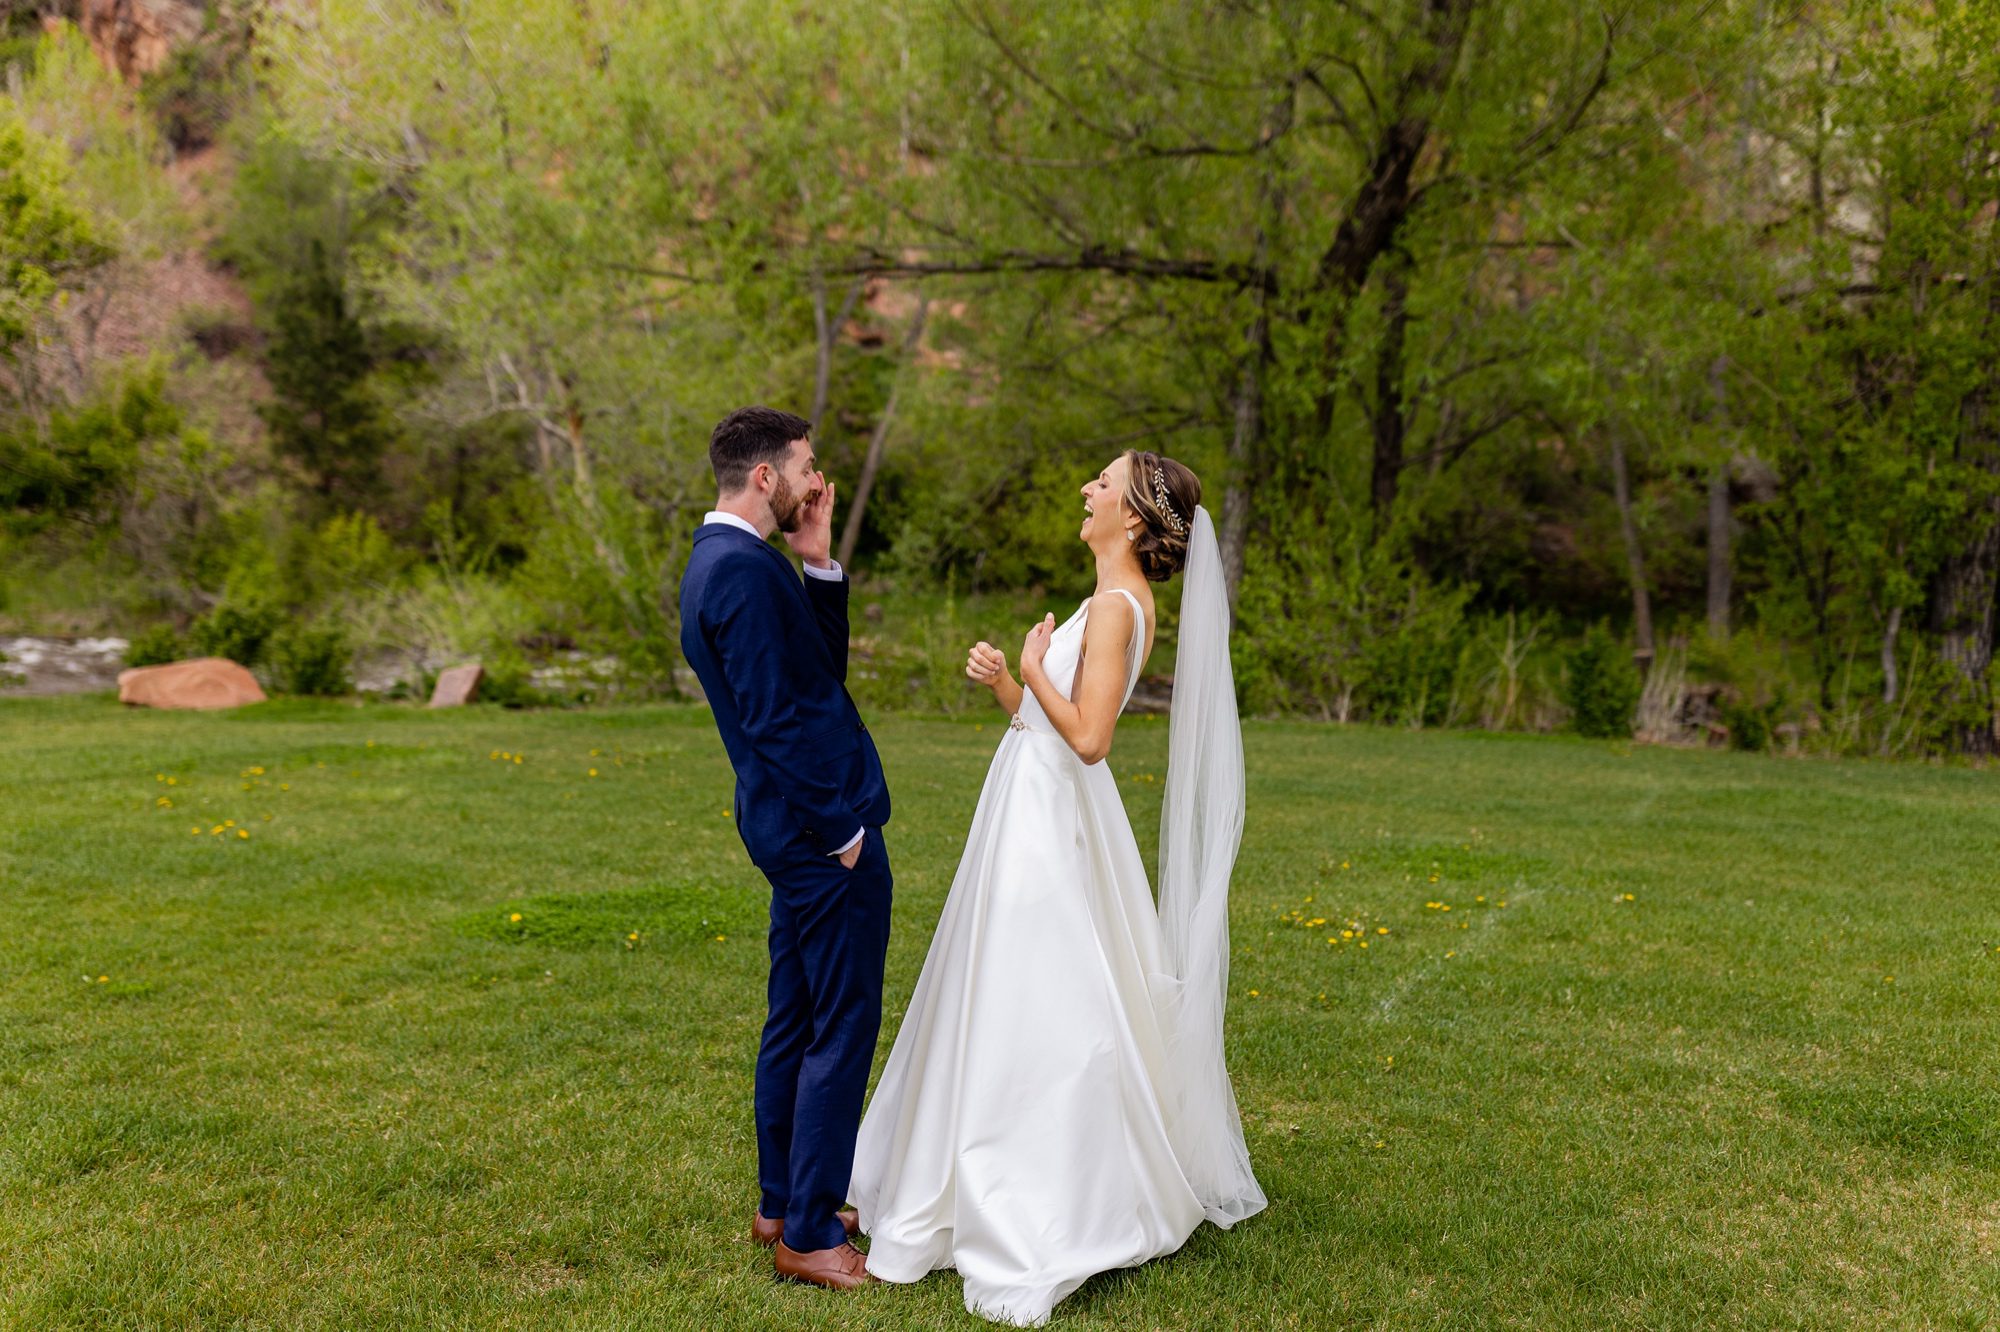 Planet Bluegrass Wedding venue in Lyons Colorado: Colorado Wedding Photographer, First look with Bride and Groom